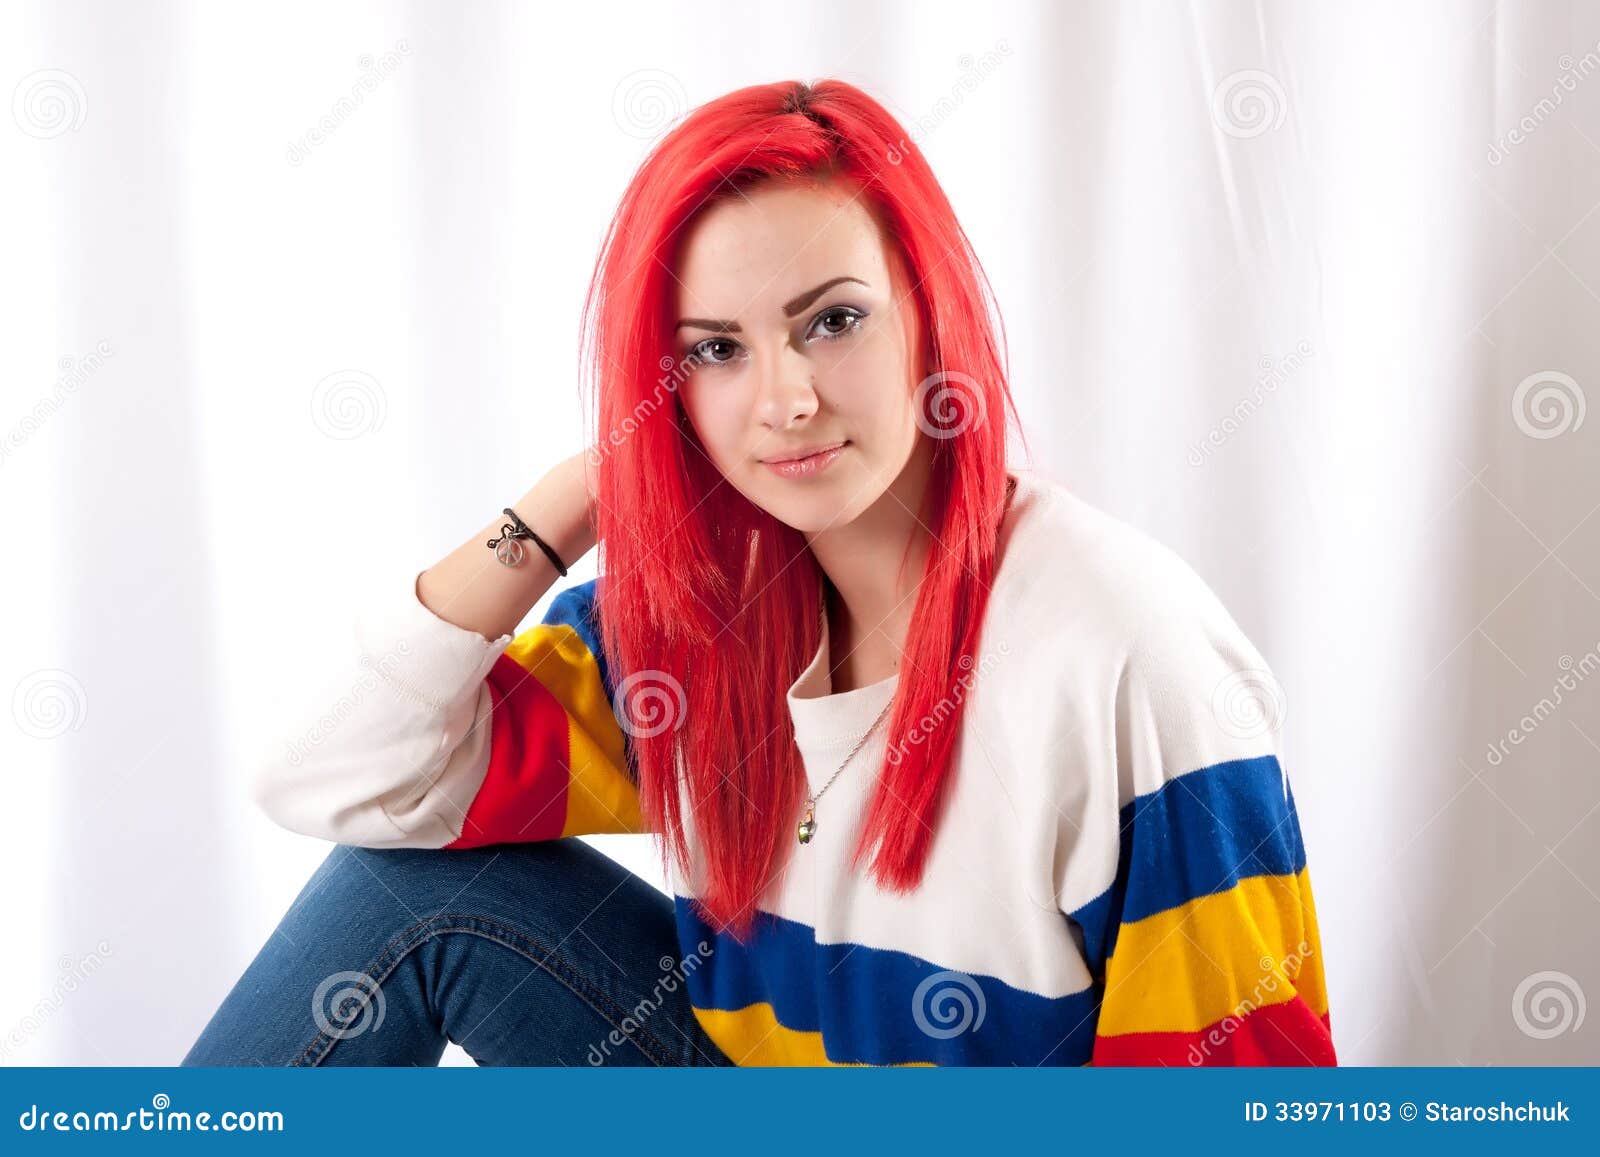 girl glowing red hair sex gallerie